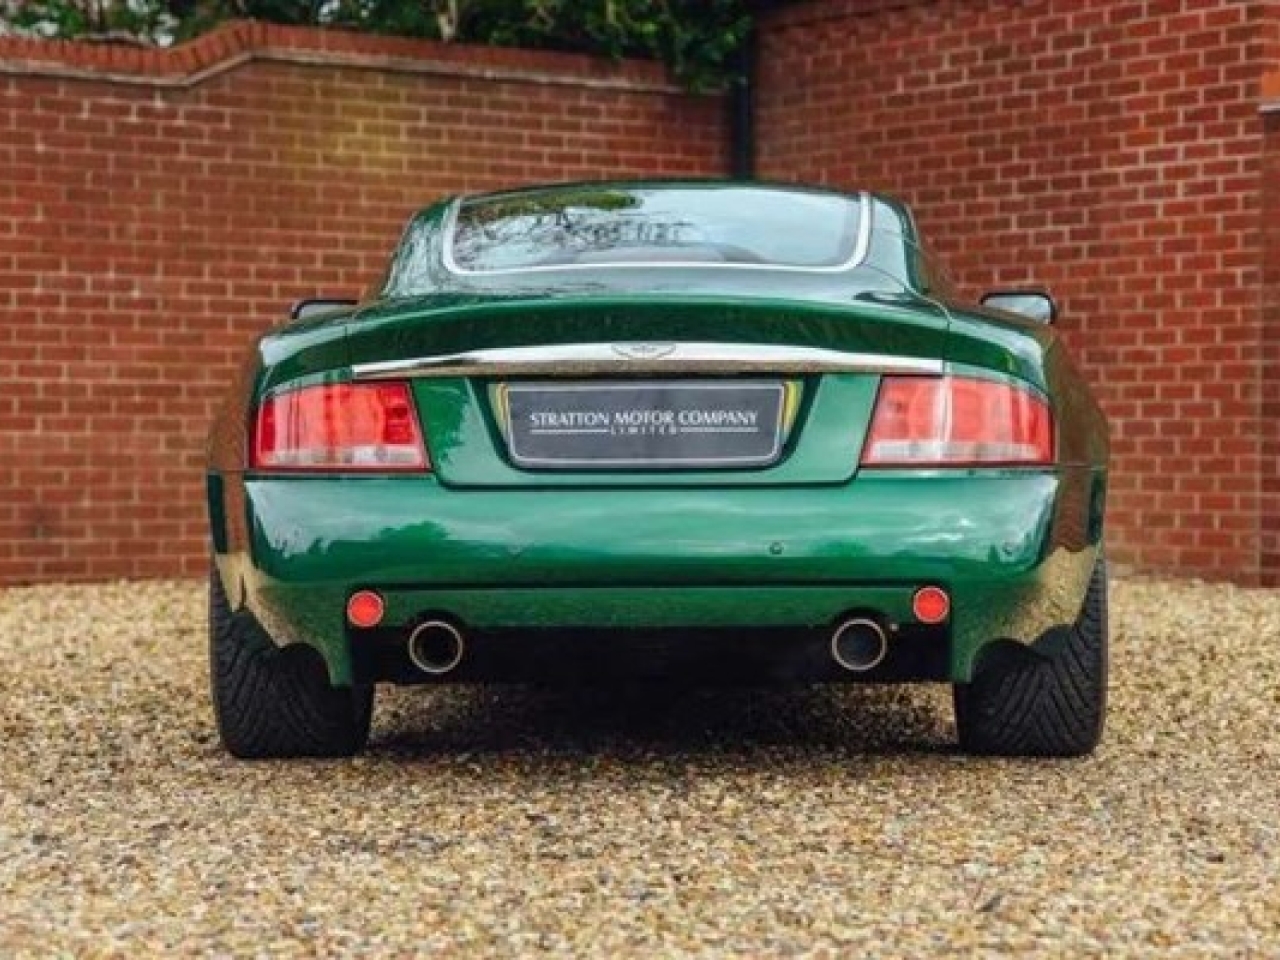 2001 Aston Martin Vanquish V12 (2+2 seating)